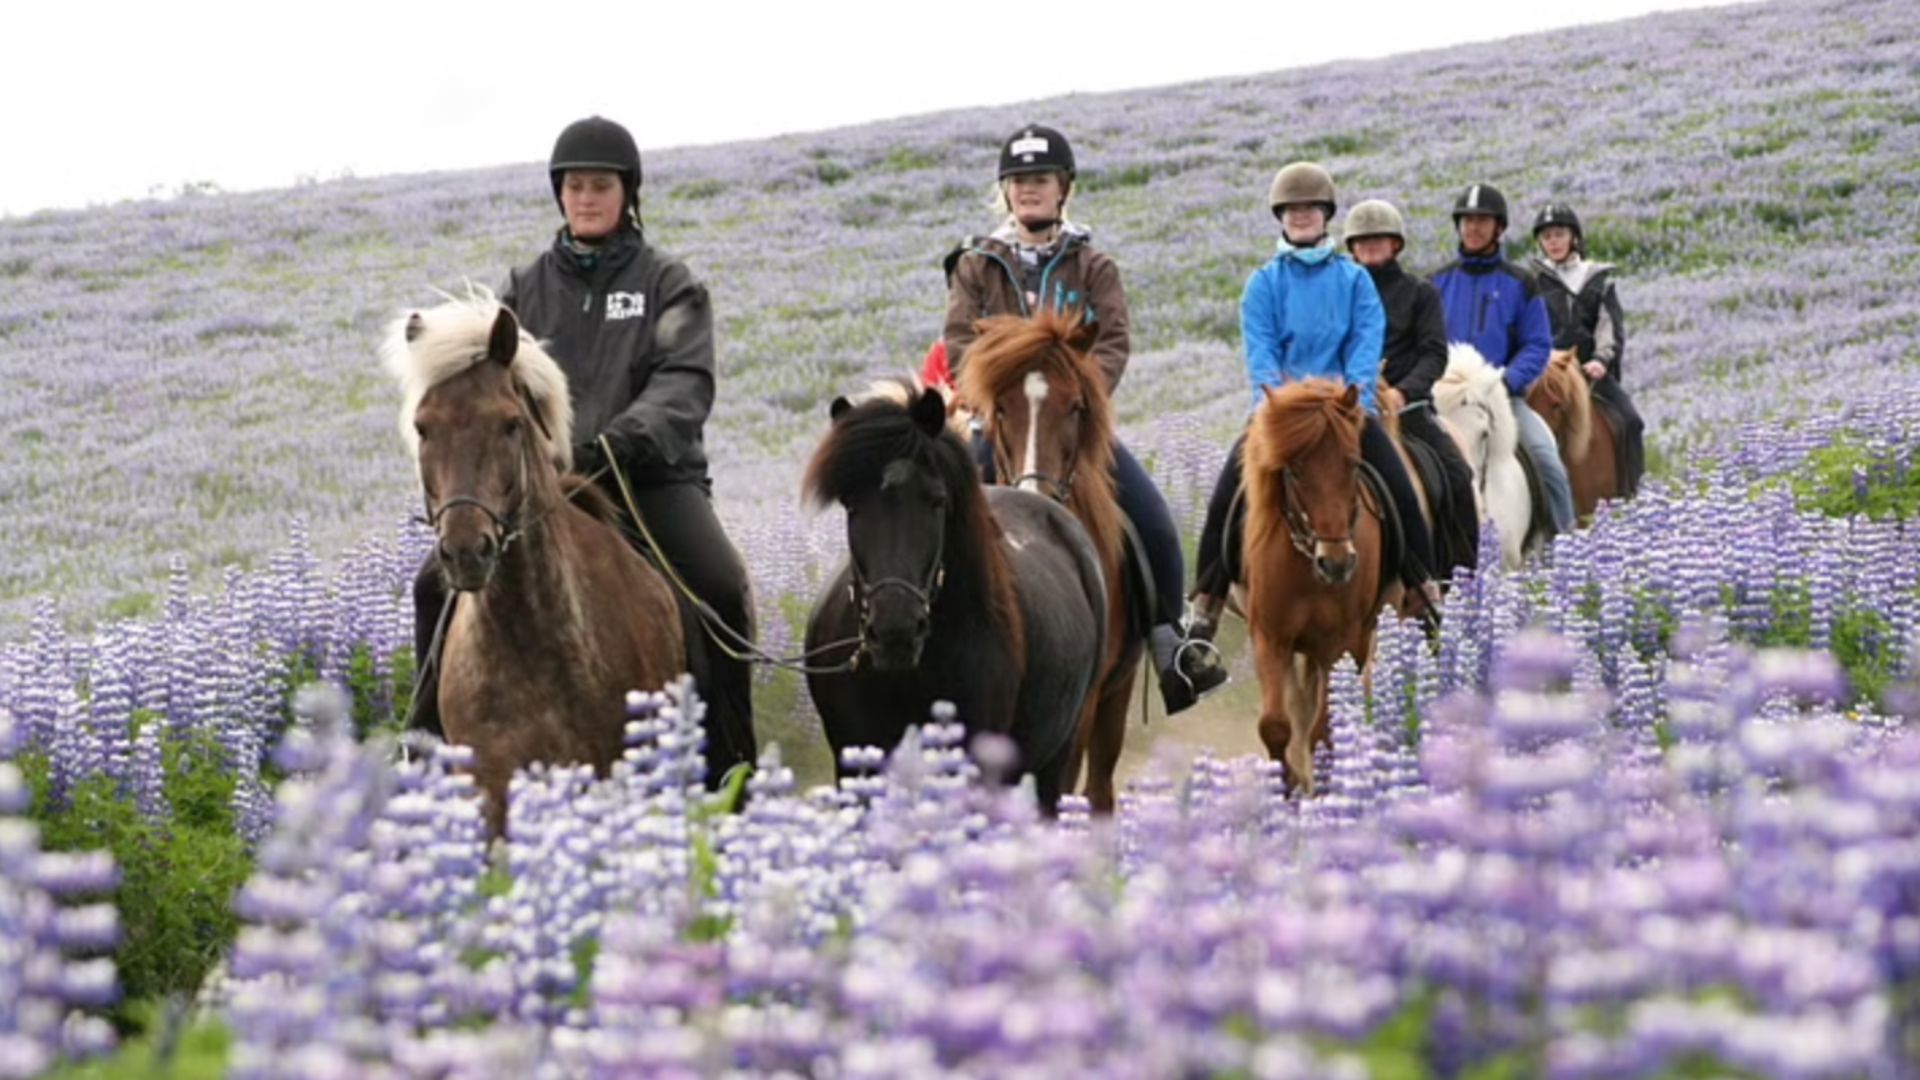 Horseback riding tour in Iceland purple flowers lupin around